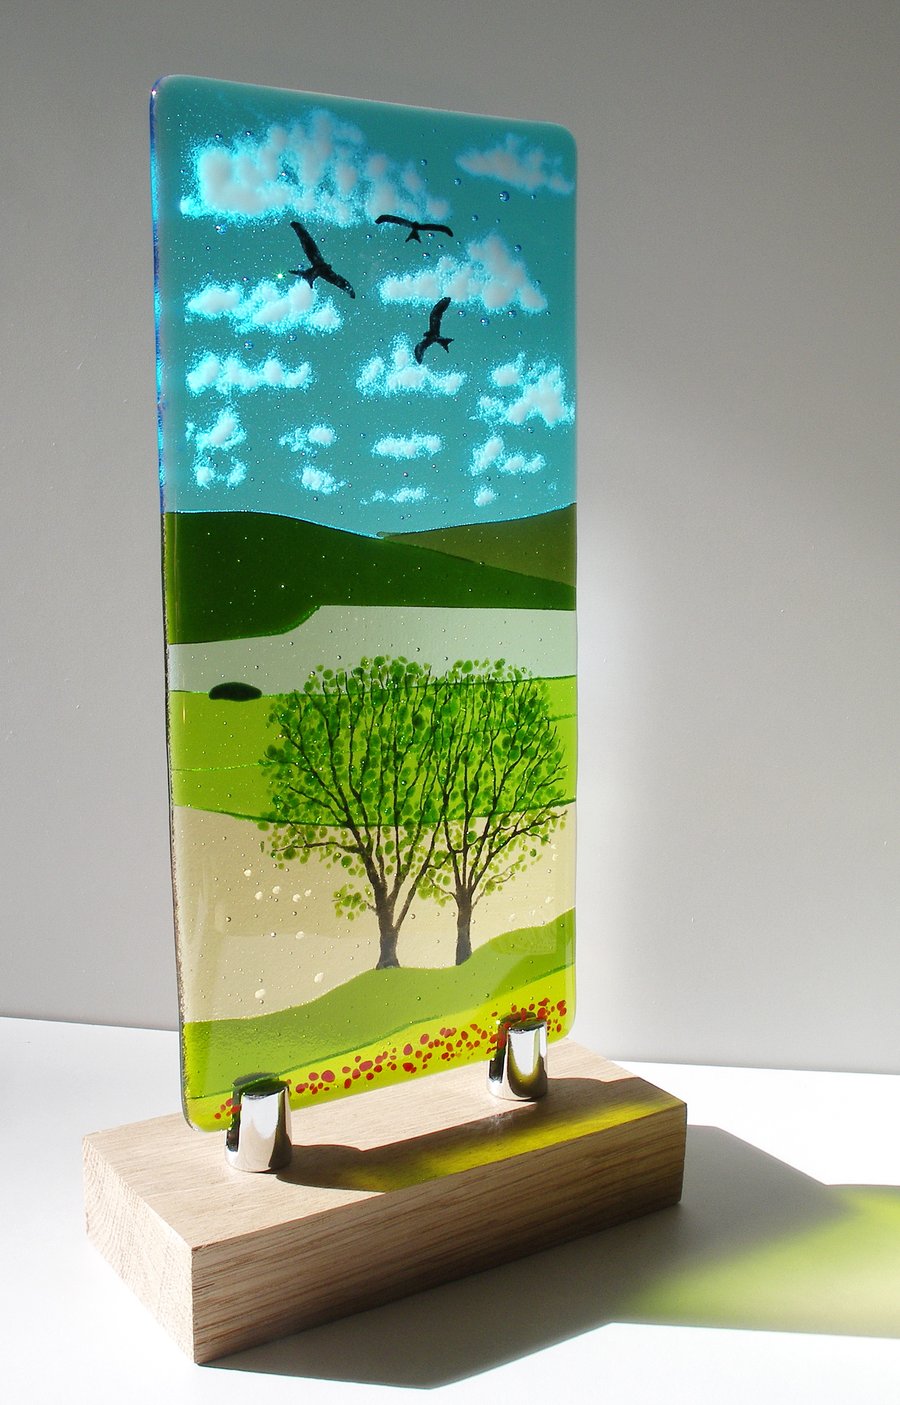 Red Kite Landscape fused glass panel